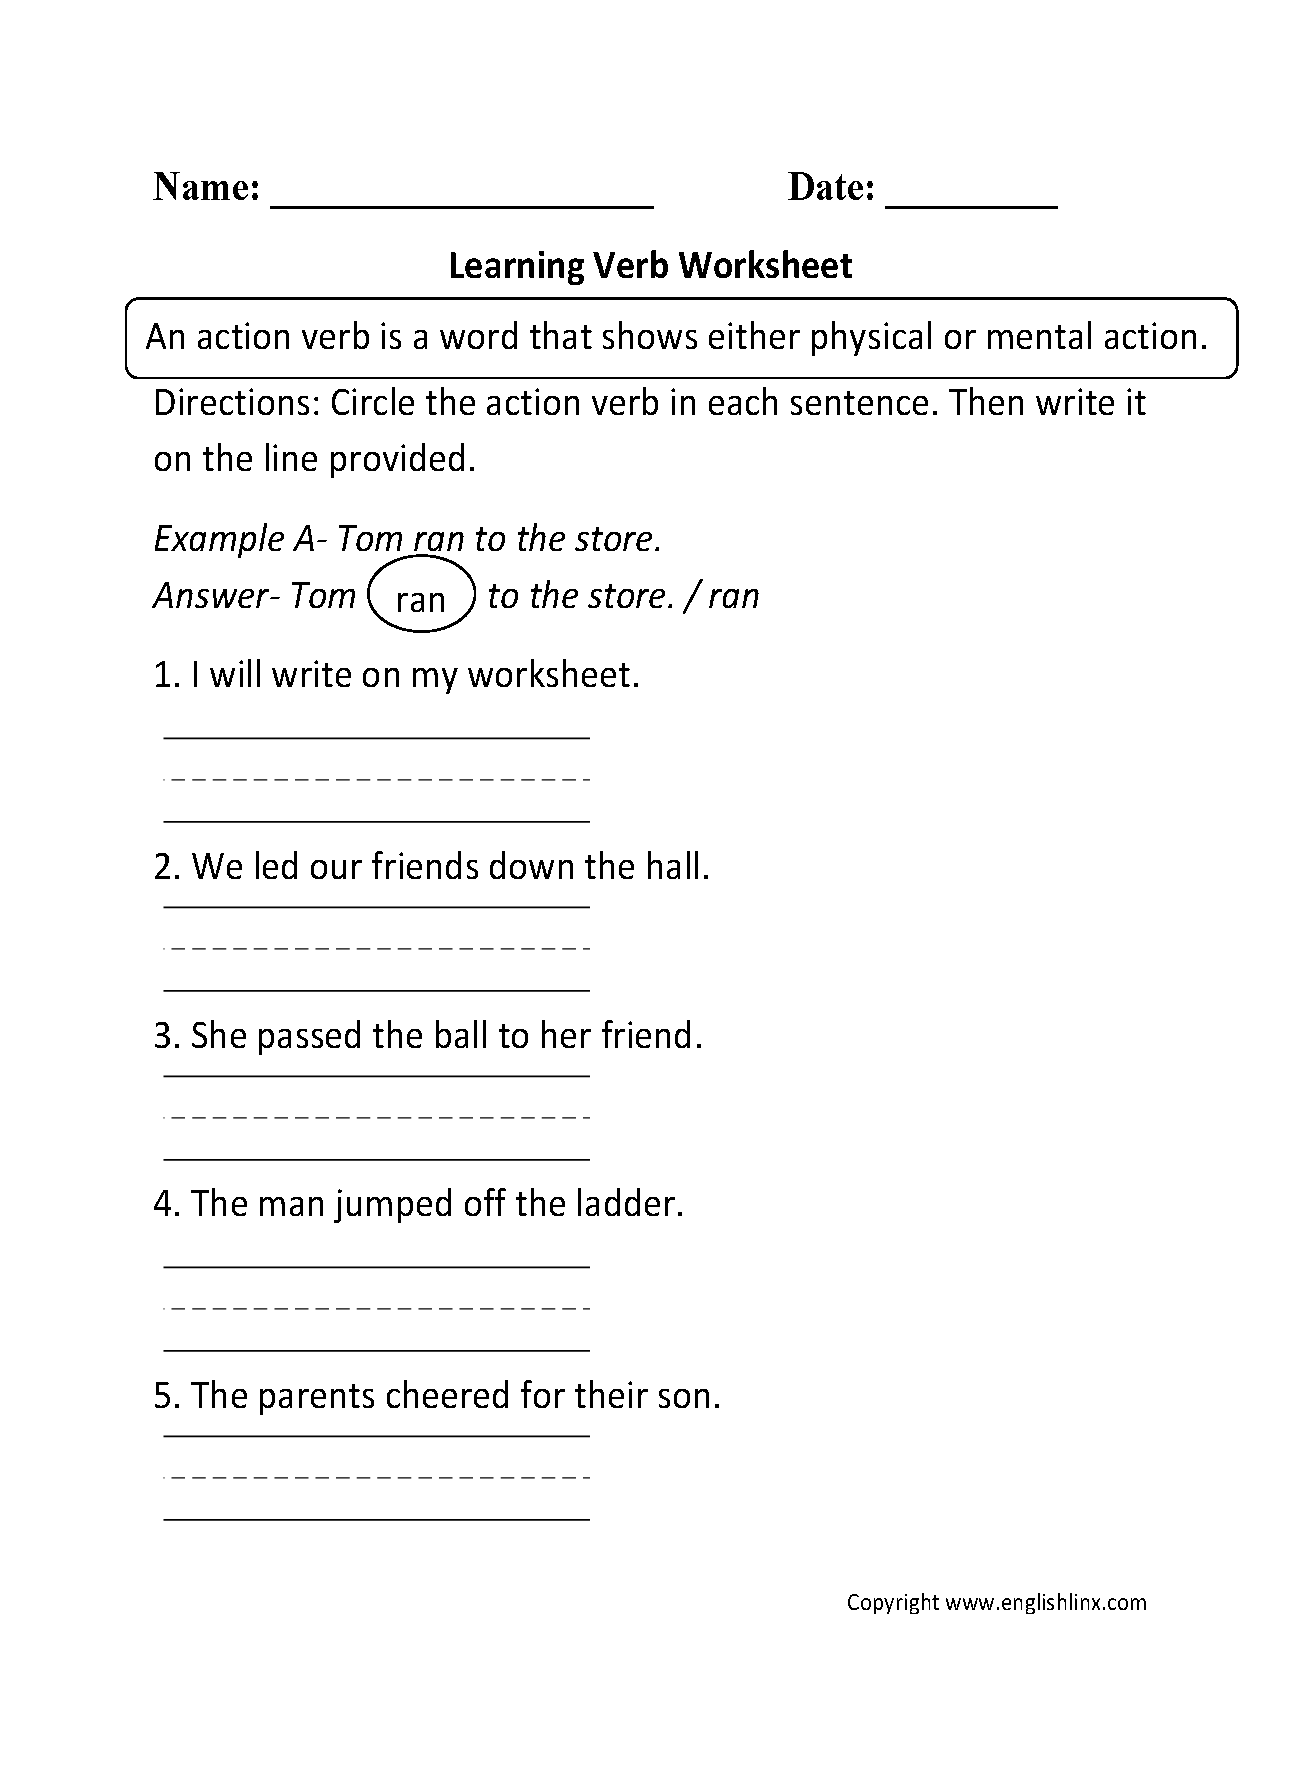 parts-speech-worksheets-verb-worksheets